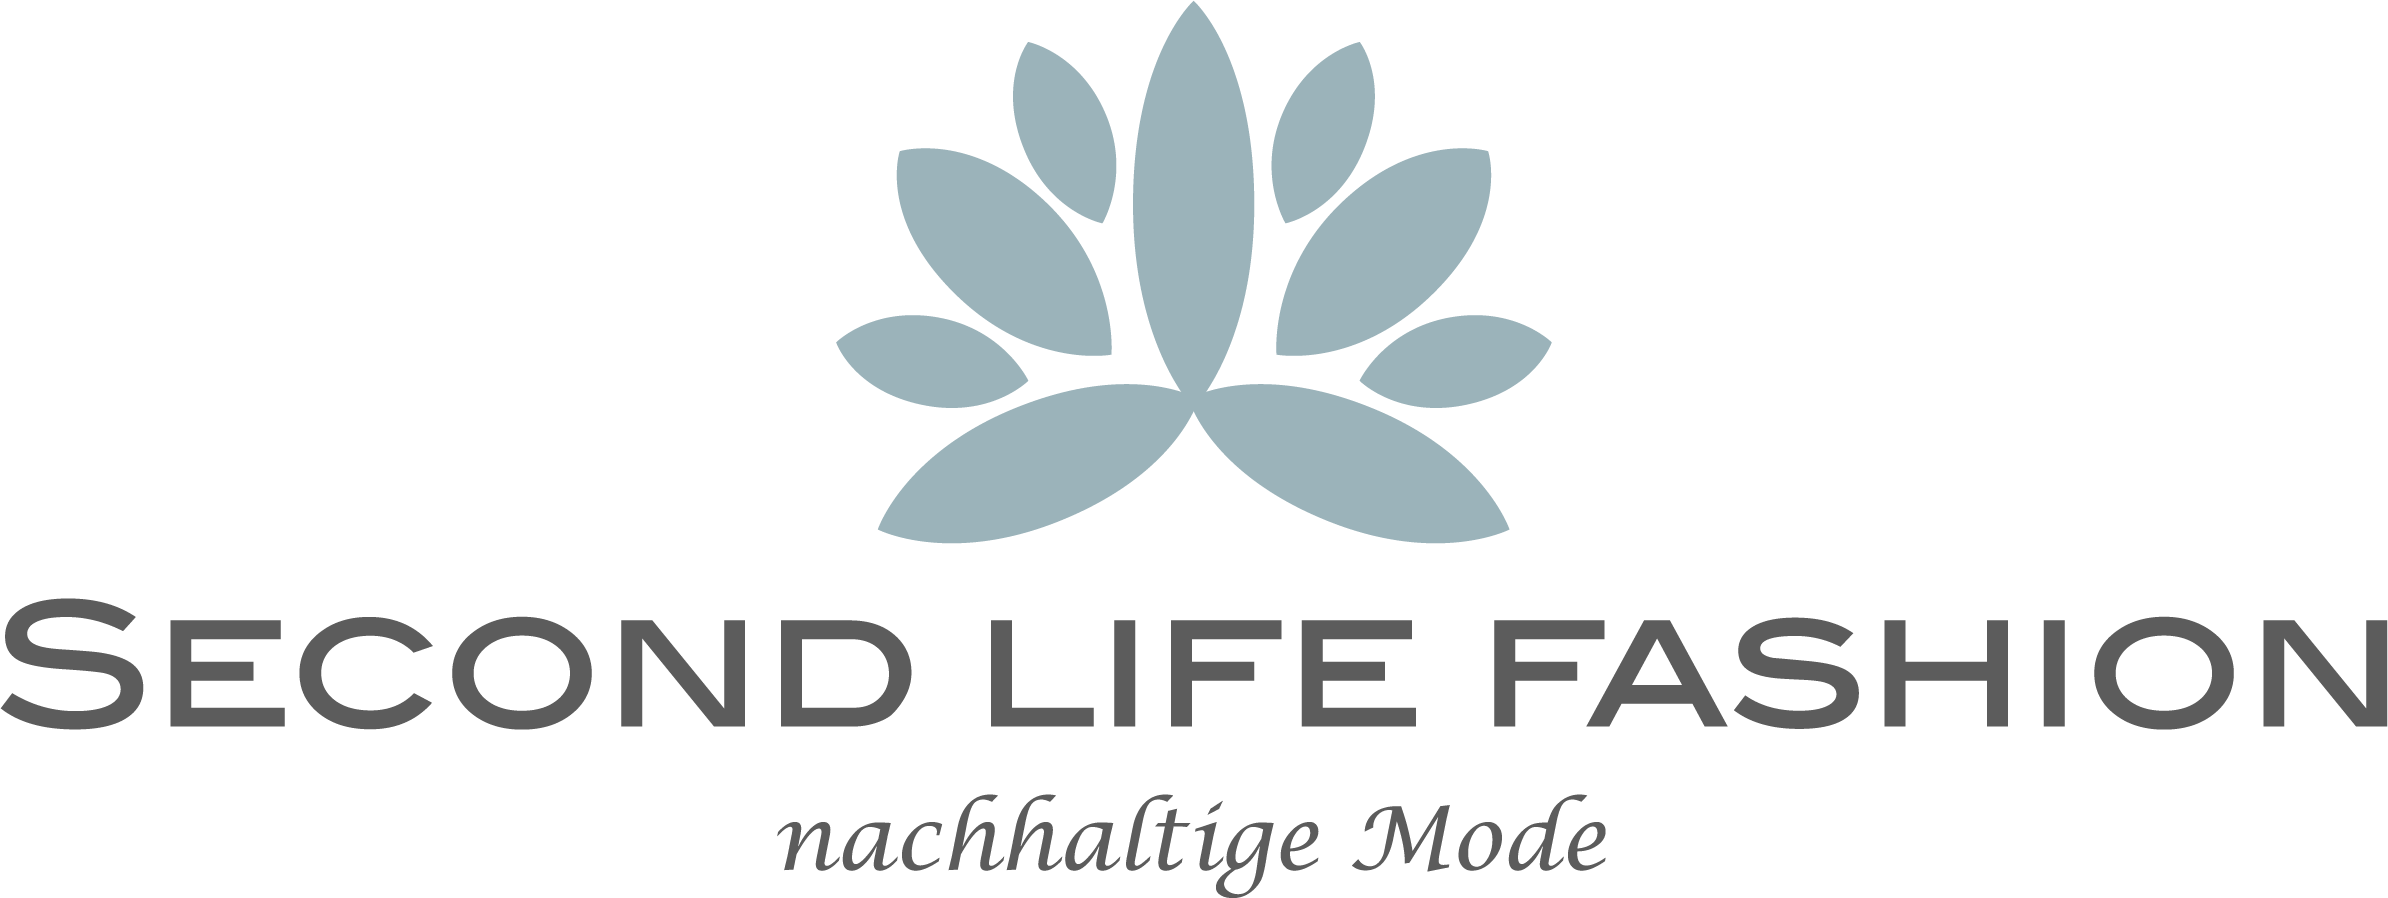 Second Life Fashion Logo